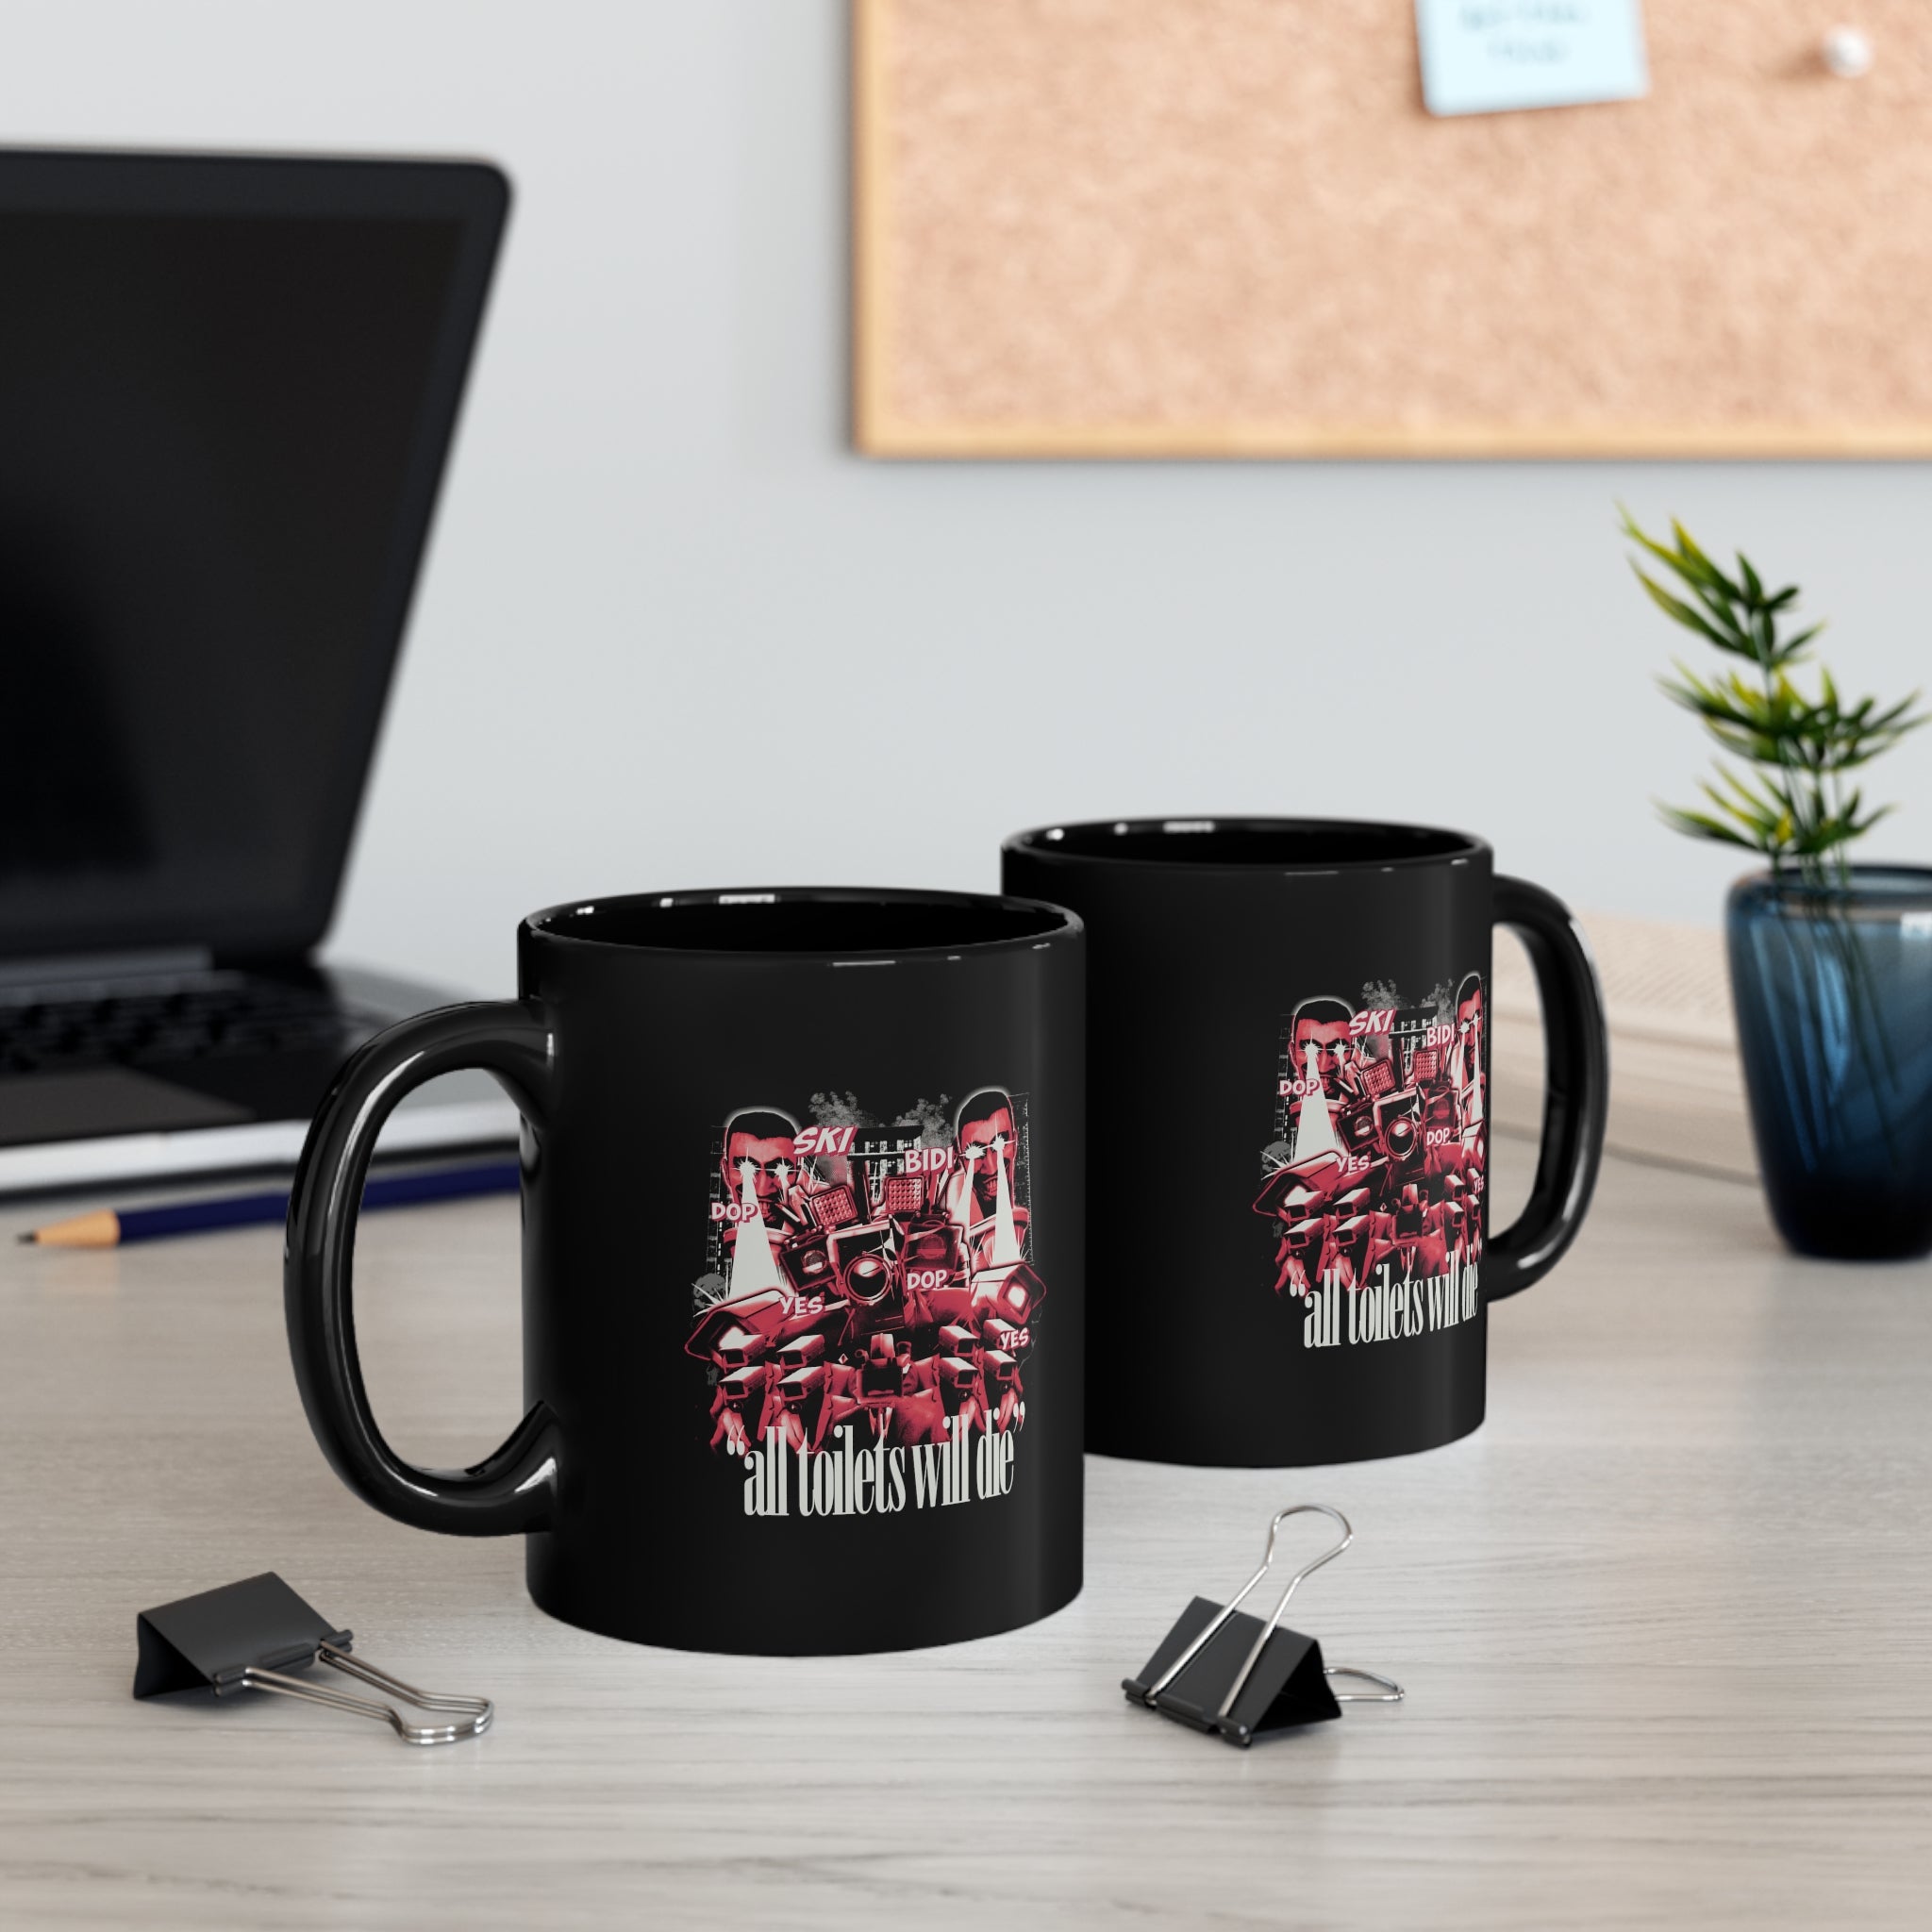 Skibidi streetwear collage mug design, black mug, glossy finish, mugs on desk with laptop and paper clips